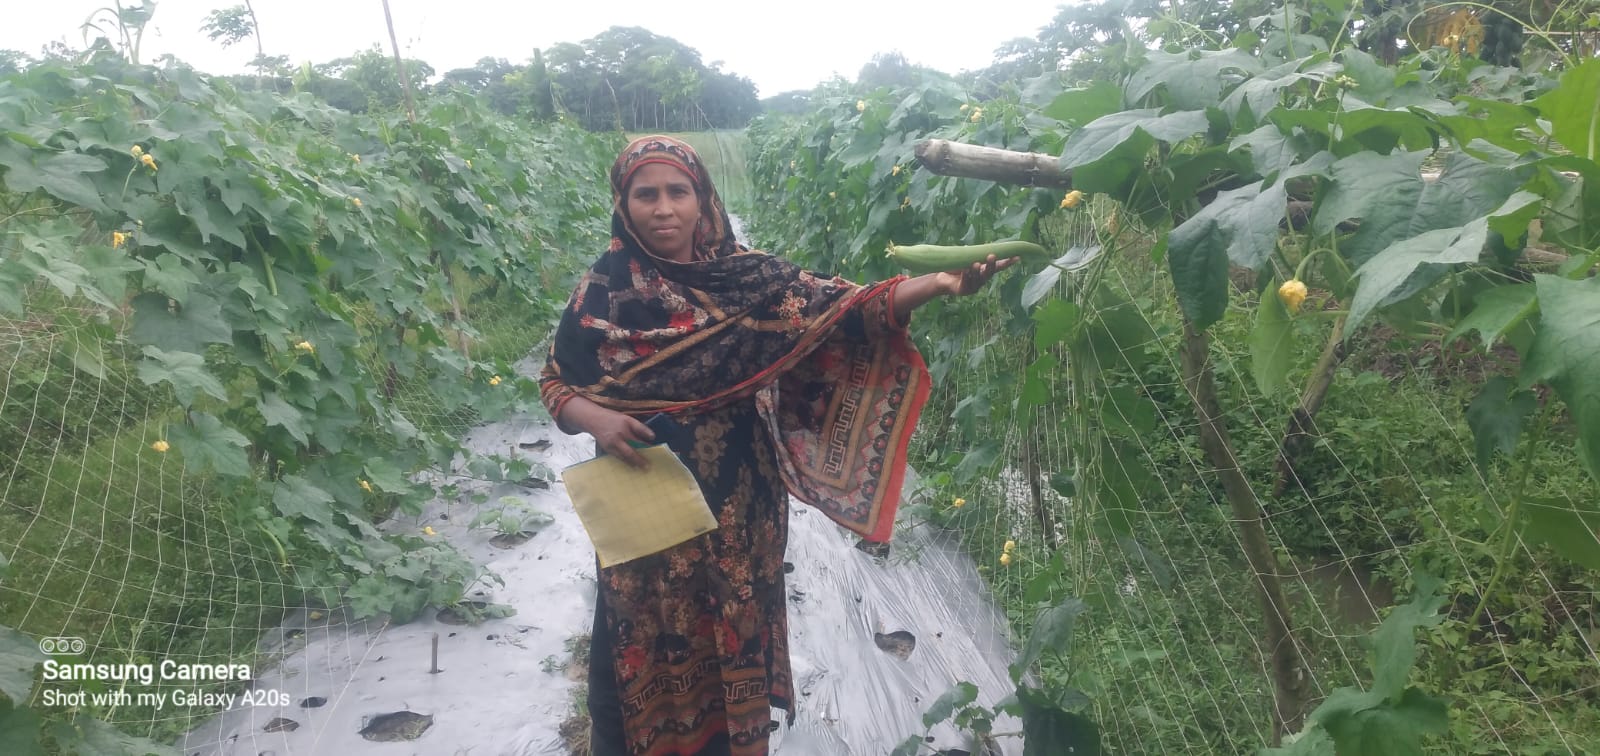 Farmer Jasmine Begum between her rows of crops